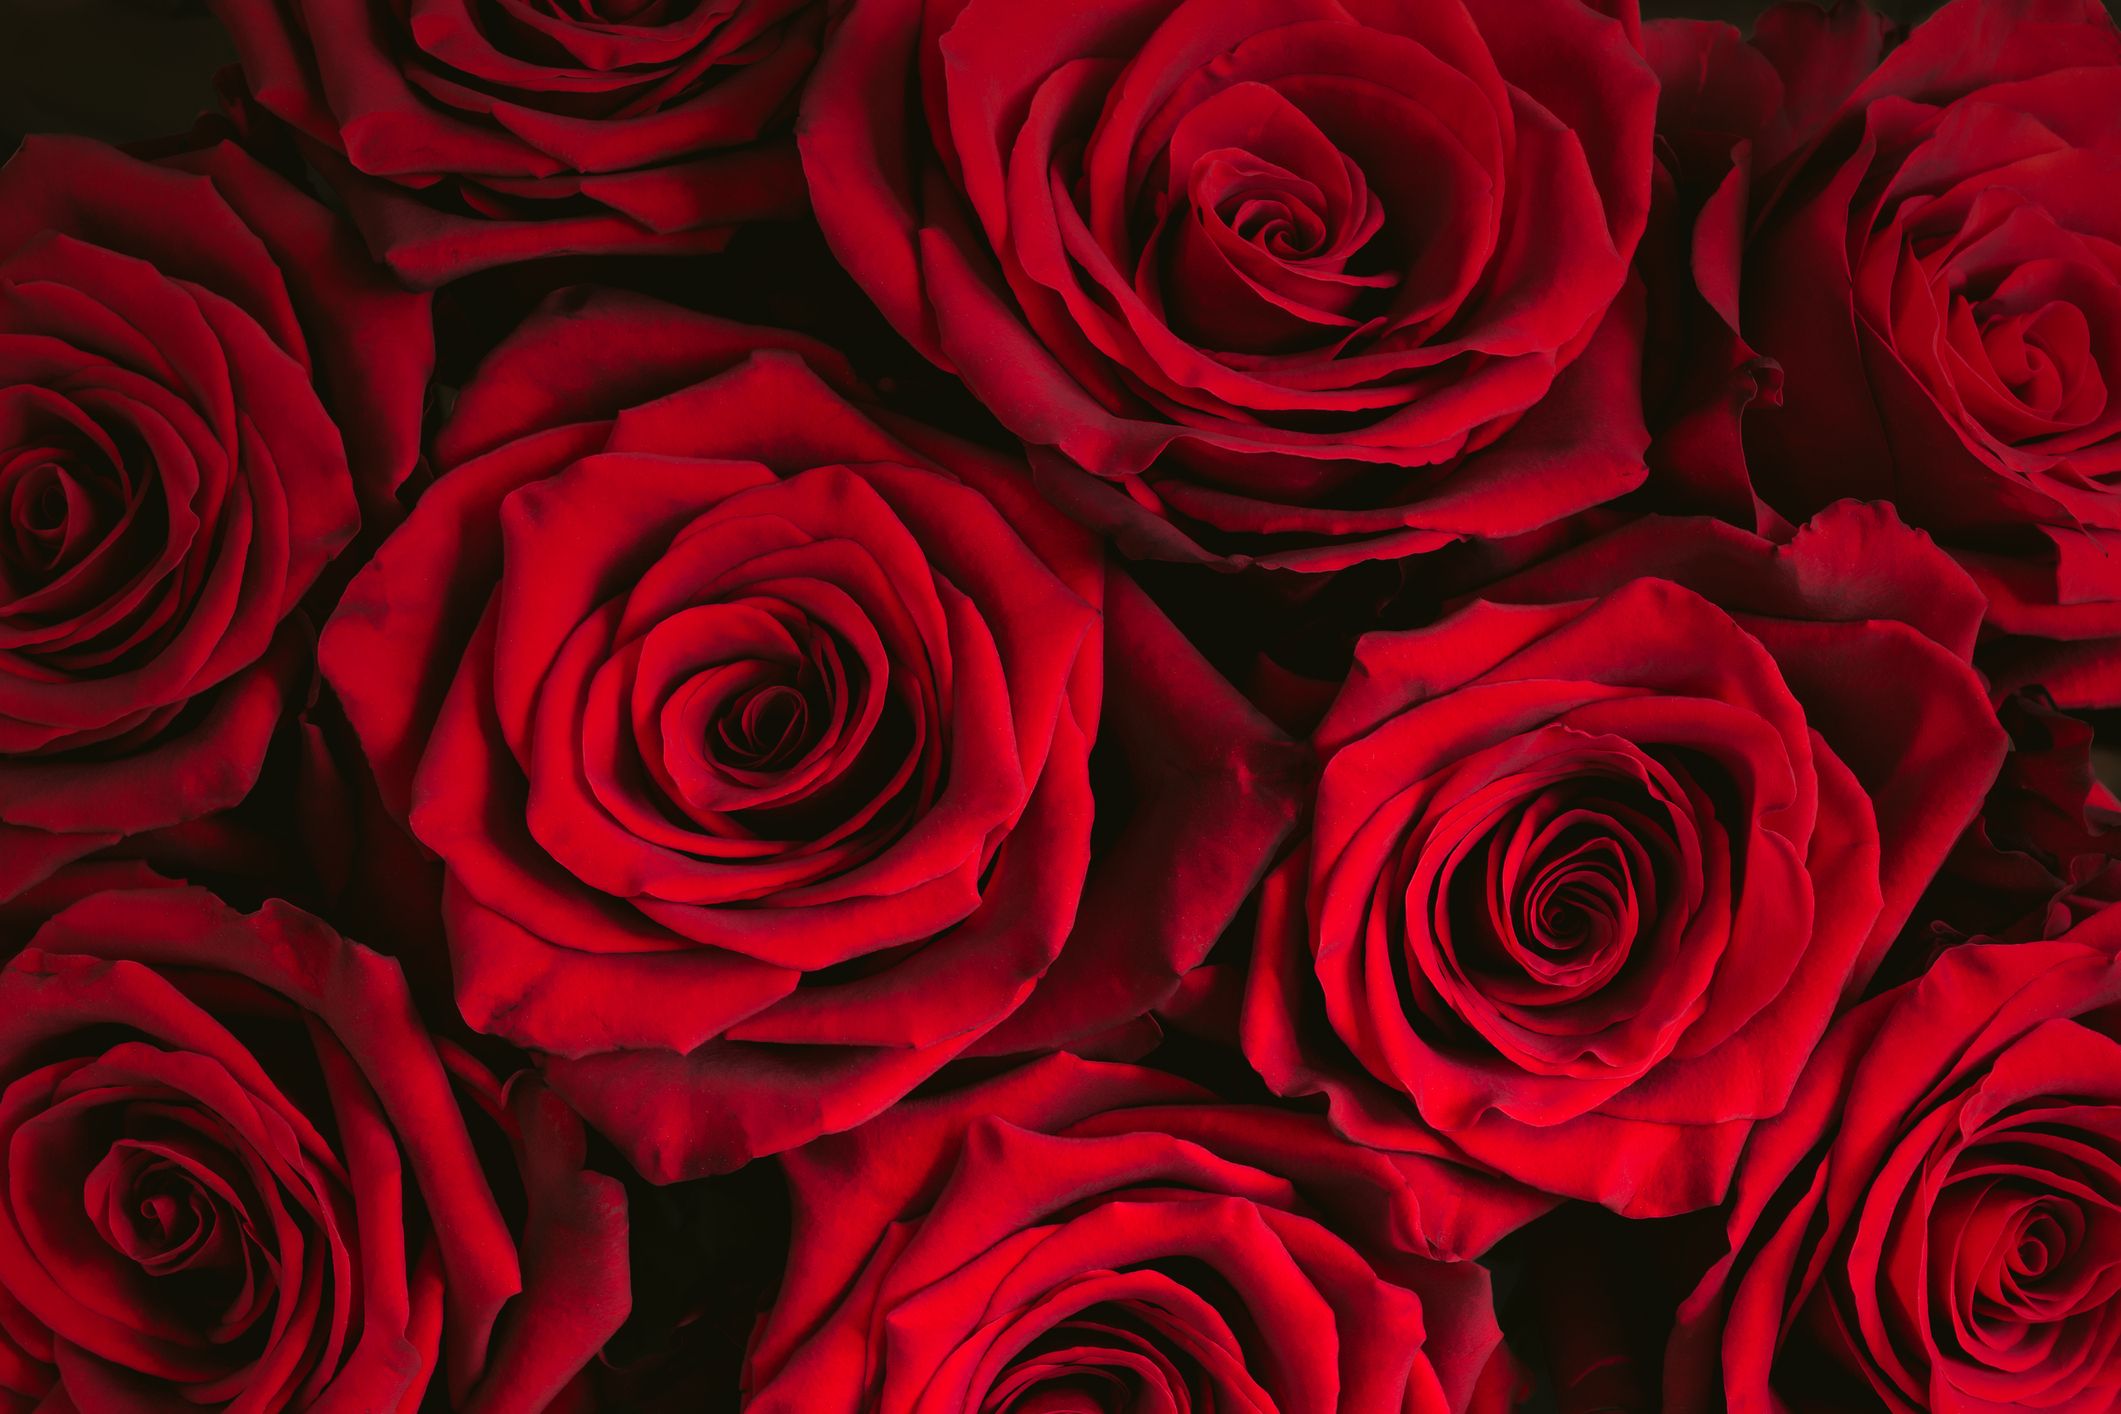 12 Popular Rose Color Meanings - Rose Color Symbolism